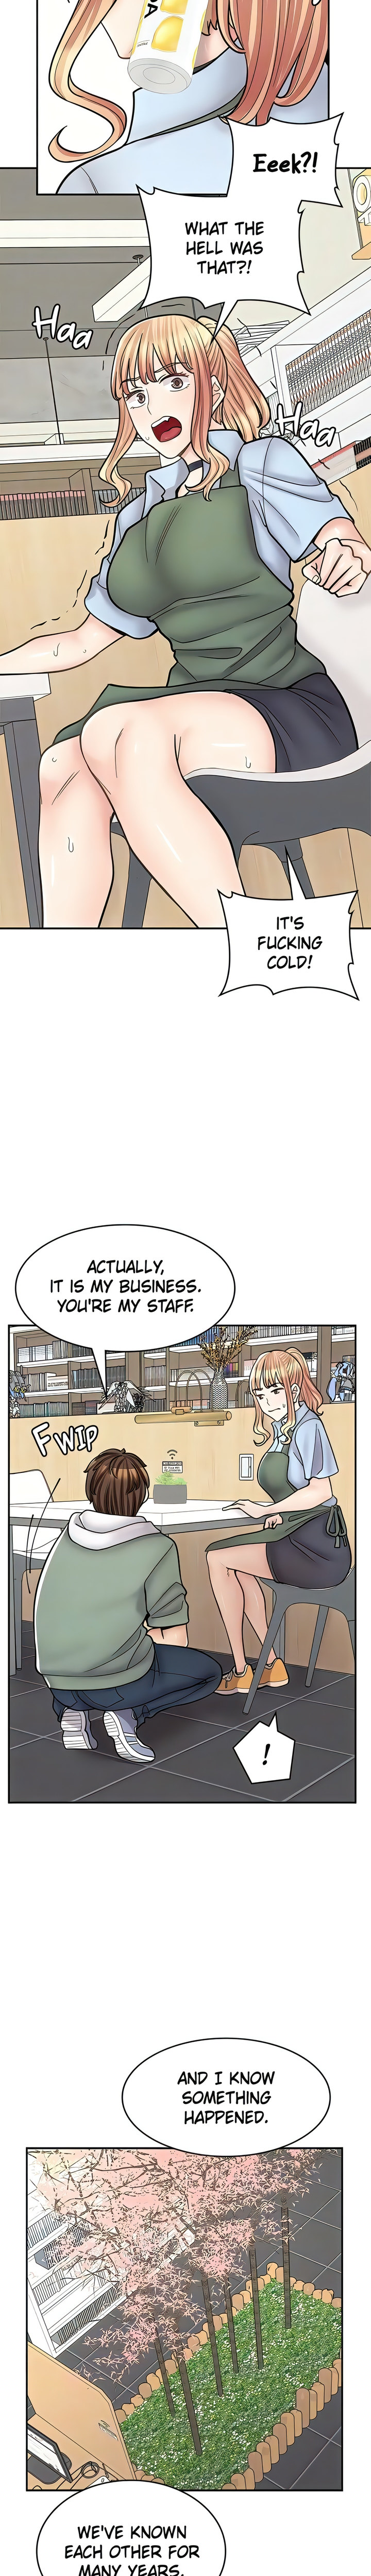 Erotic Manga Café Girls - Chapter 45 Page 18